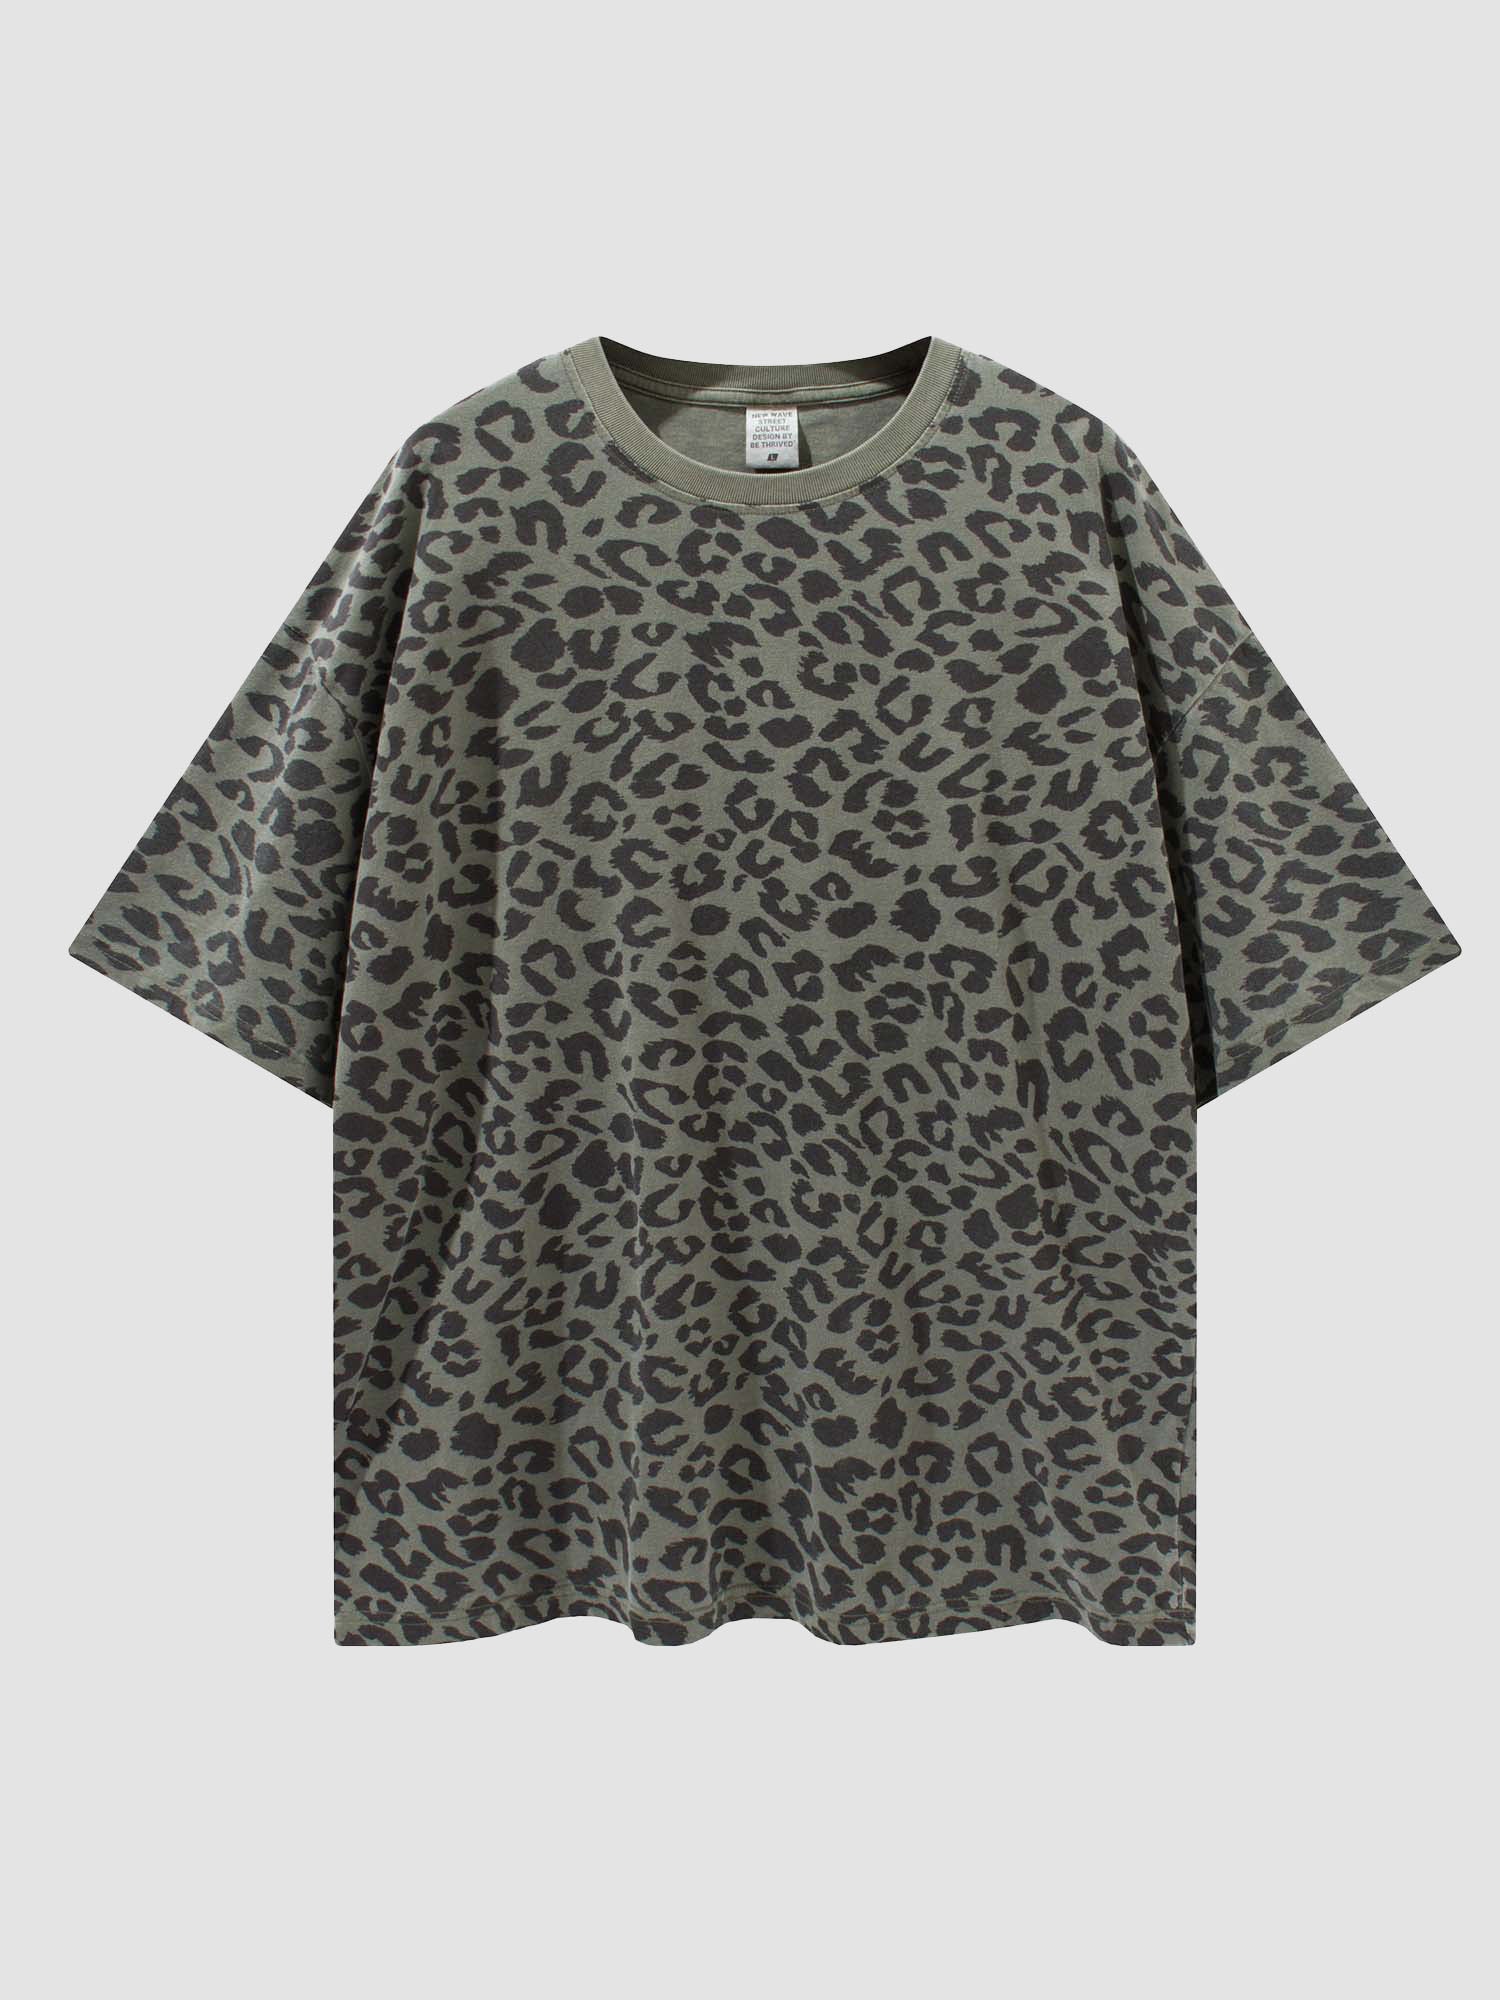 JUSTNOTAG Green leopard Print 100% Cotton Short Sleeve Tee